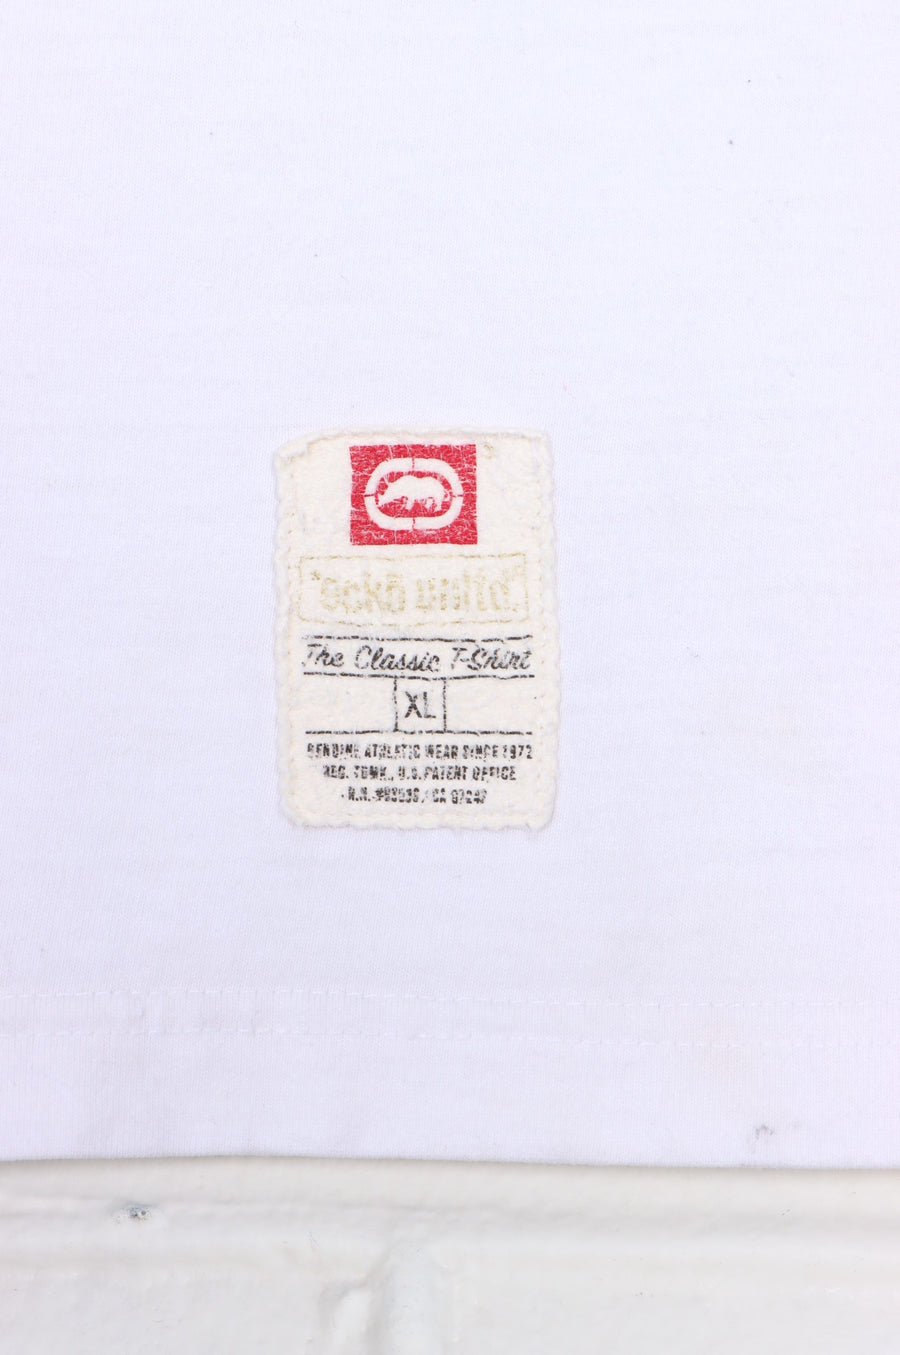 ECKO UNLTD Leather Patch Logo White T-Shirt (XL)